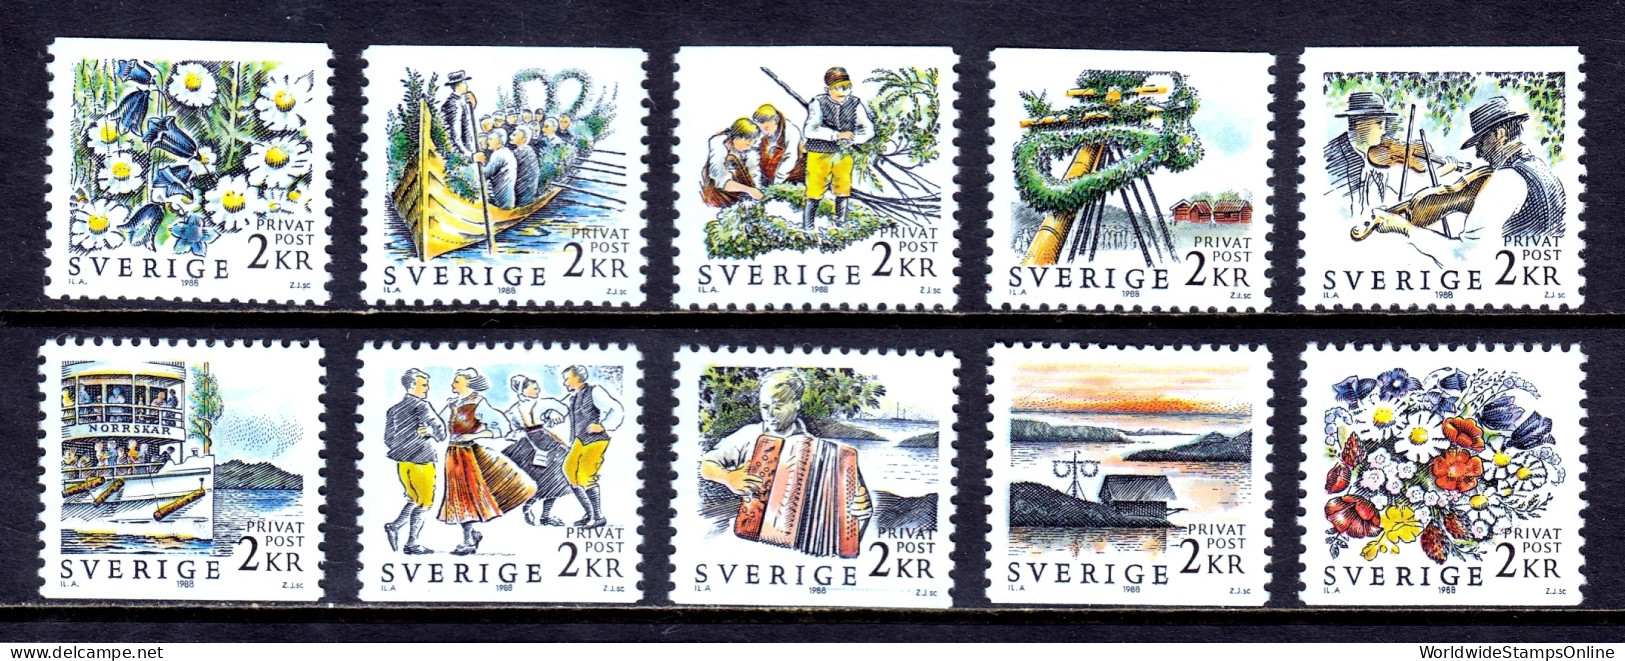 Sweden - Scott #1681-1690 - MNH - SCV $20 - Unused Stamps